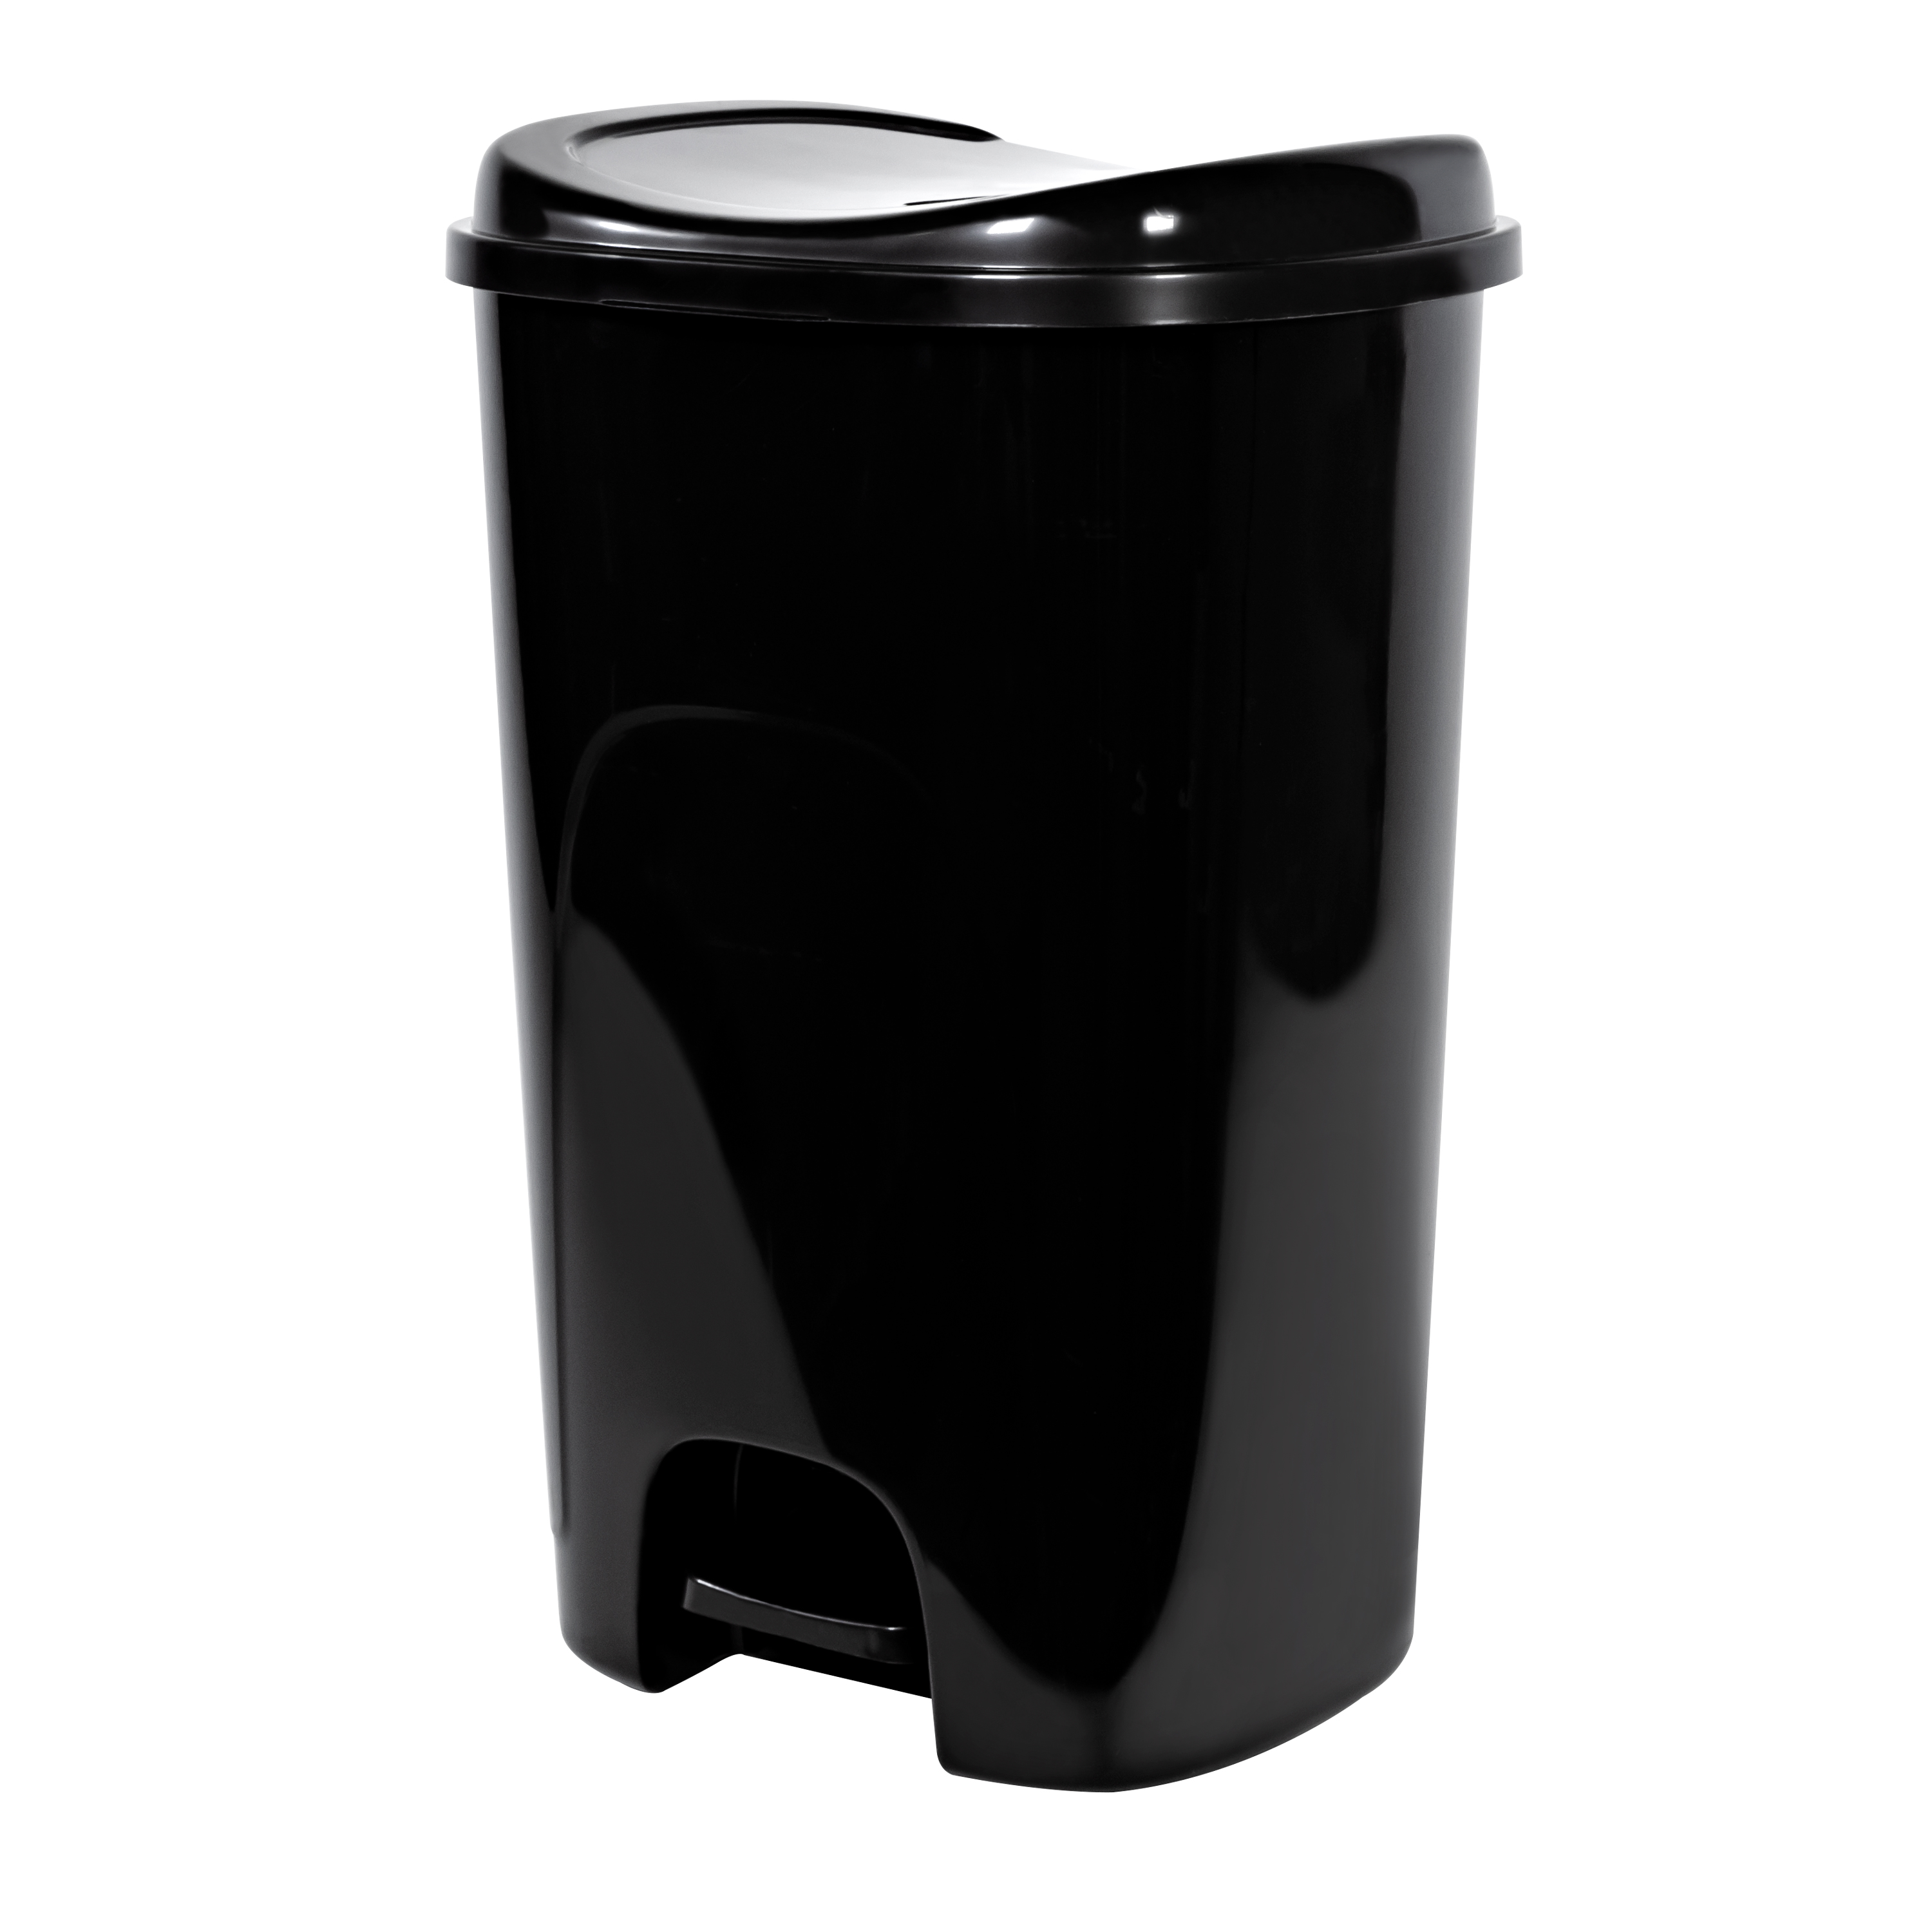 Hefty StepOn Ktichen Garbage Can, High Polish Black, 13 gal - image 1 of 4